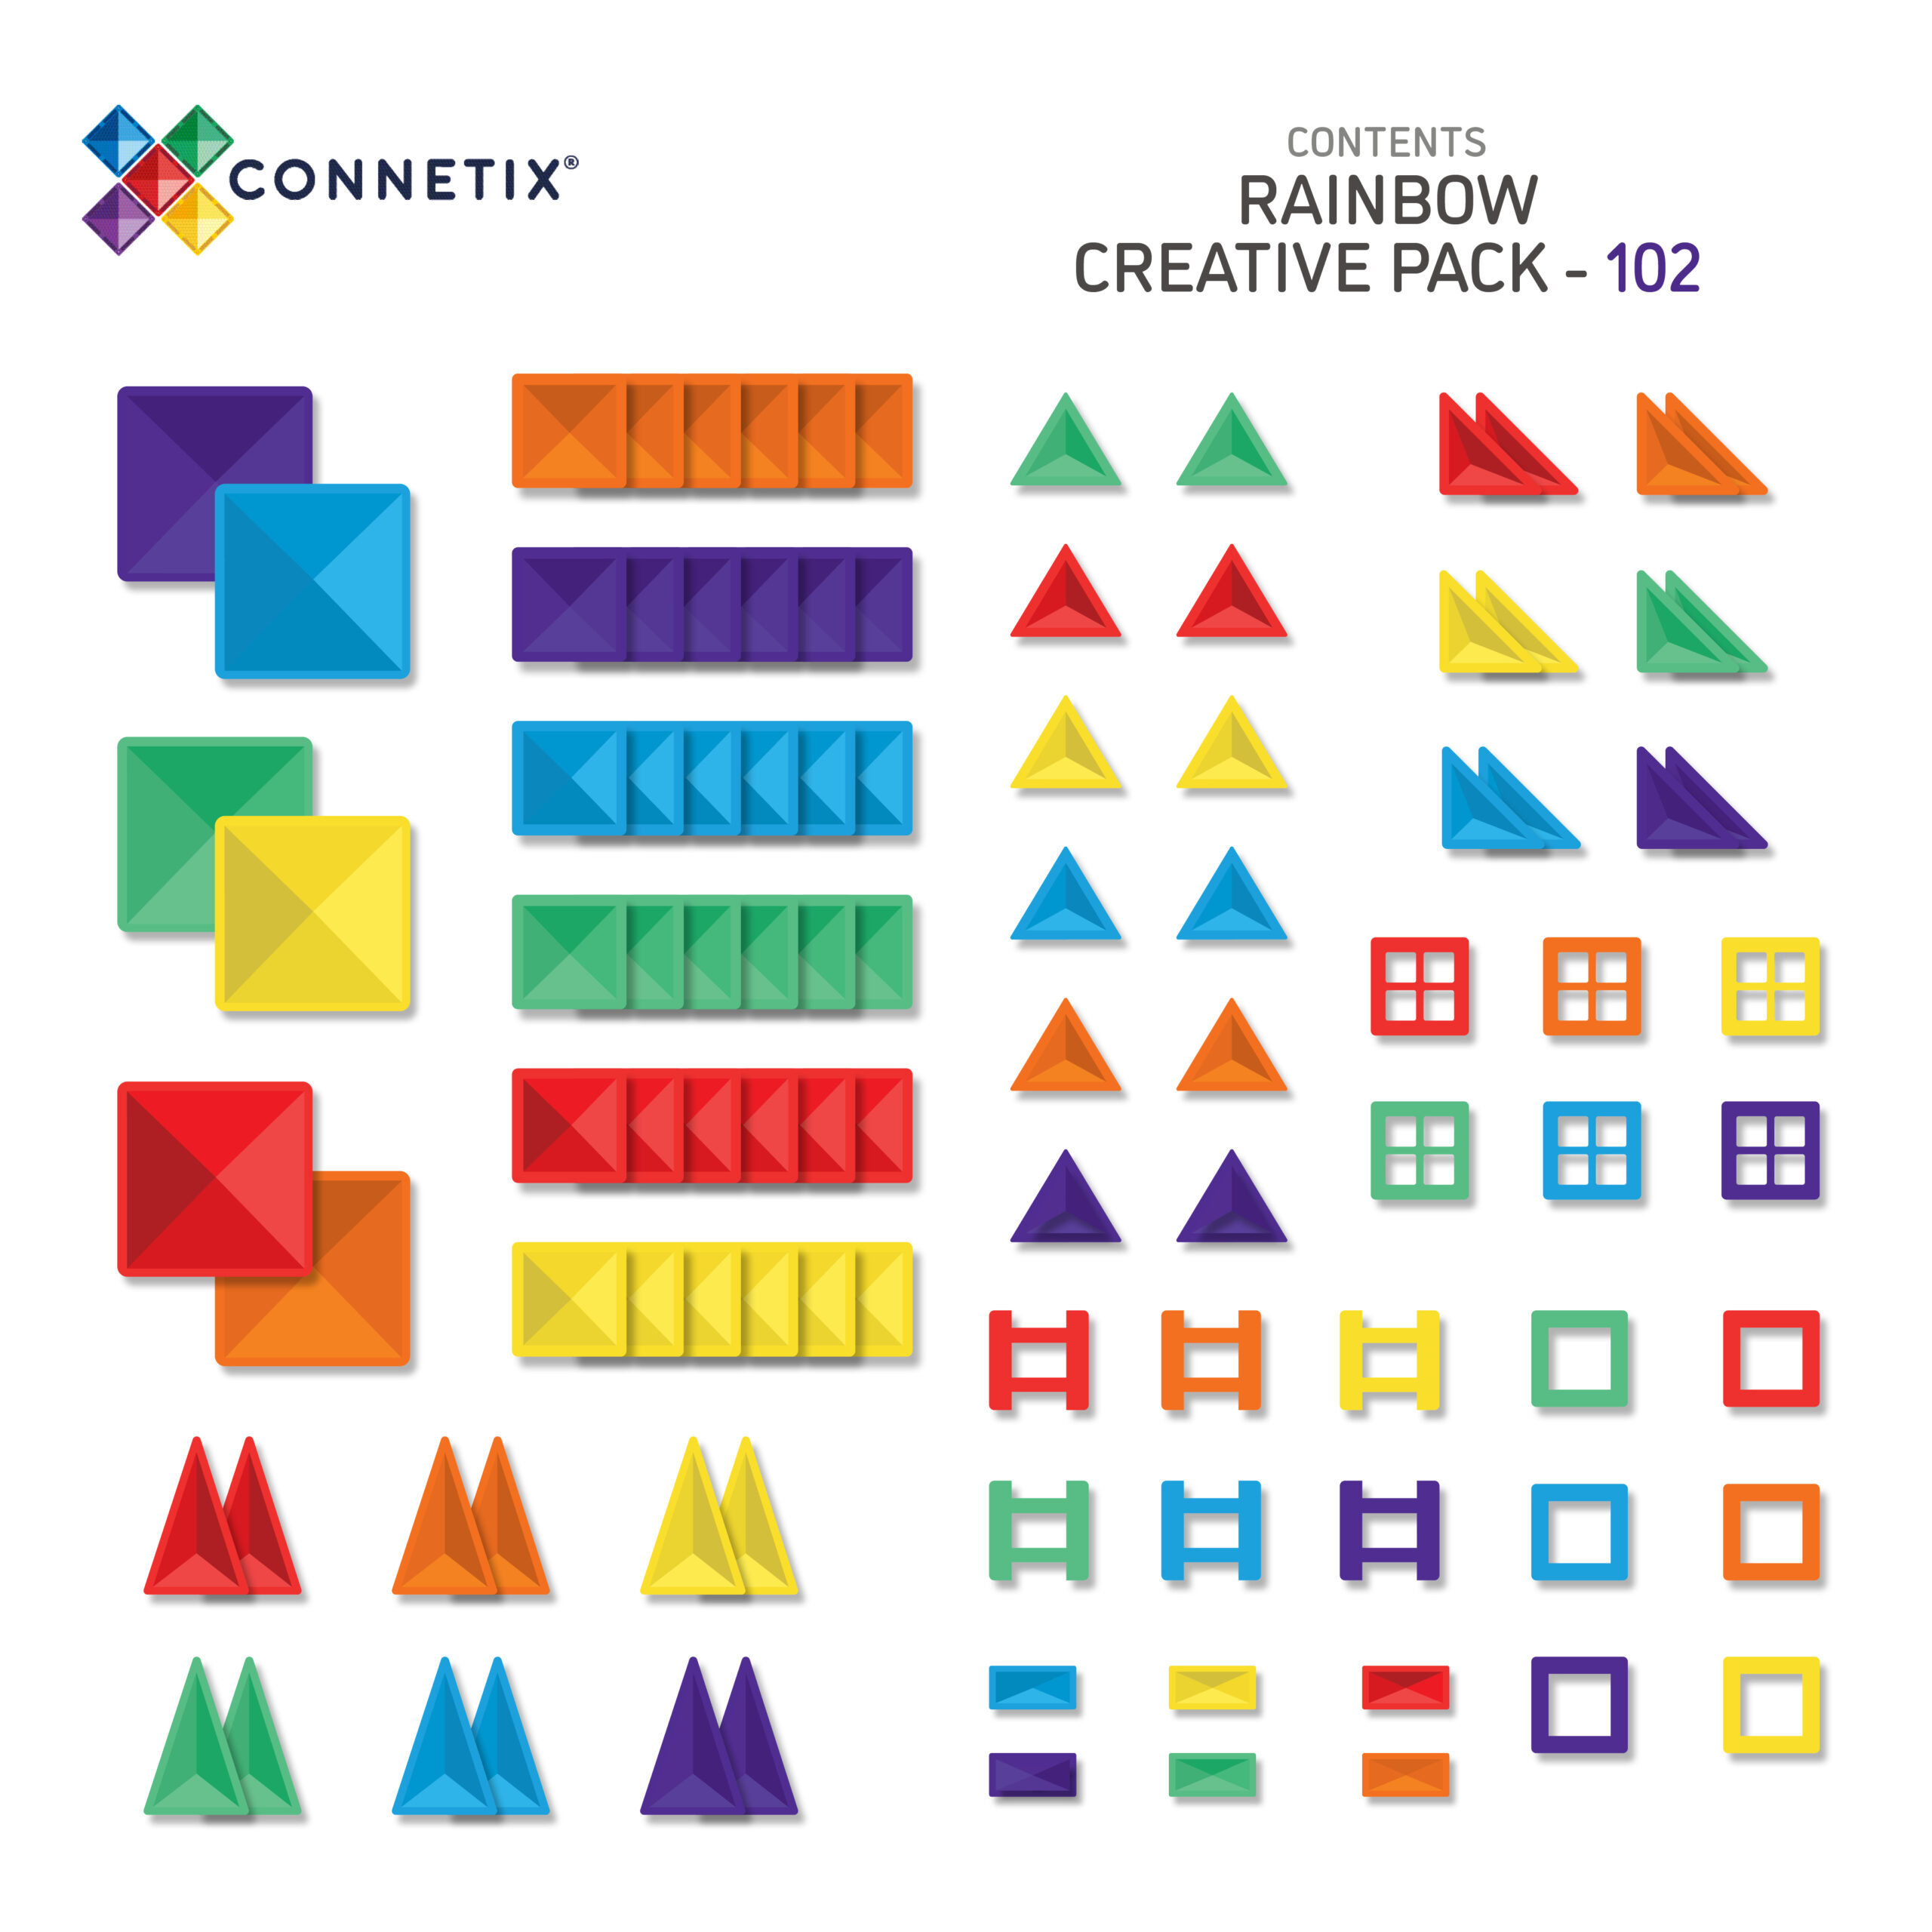 CT_Box_Contents_Rainbow_Creative_102